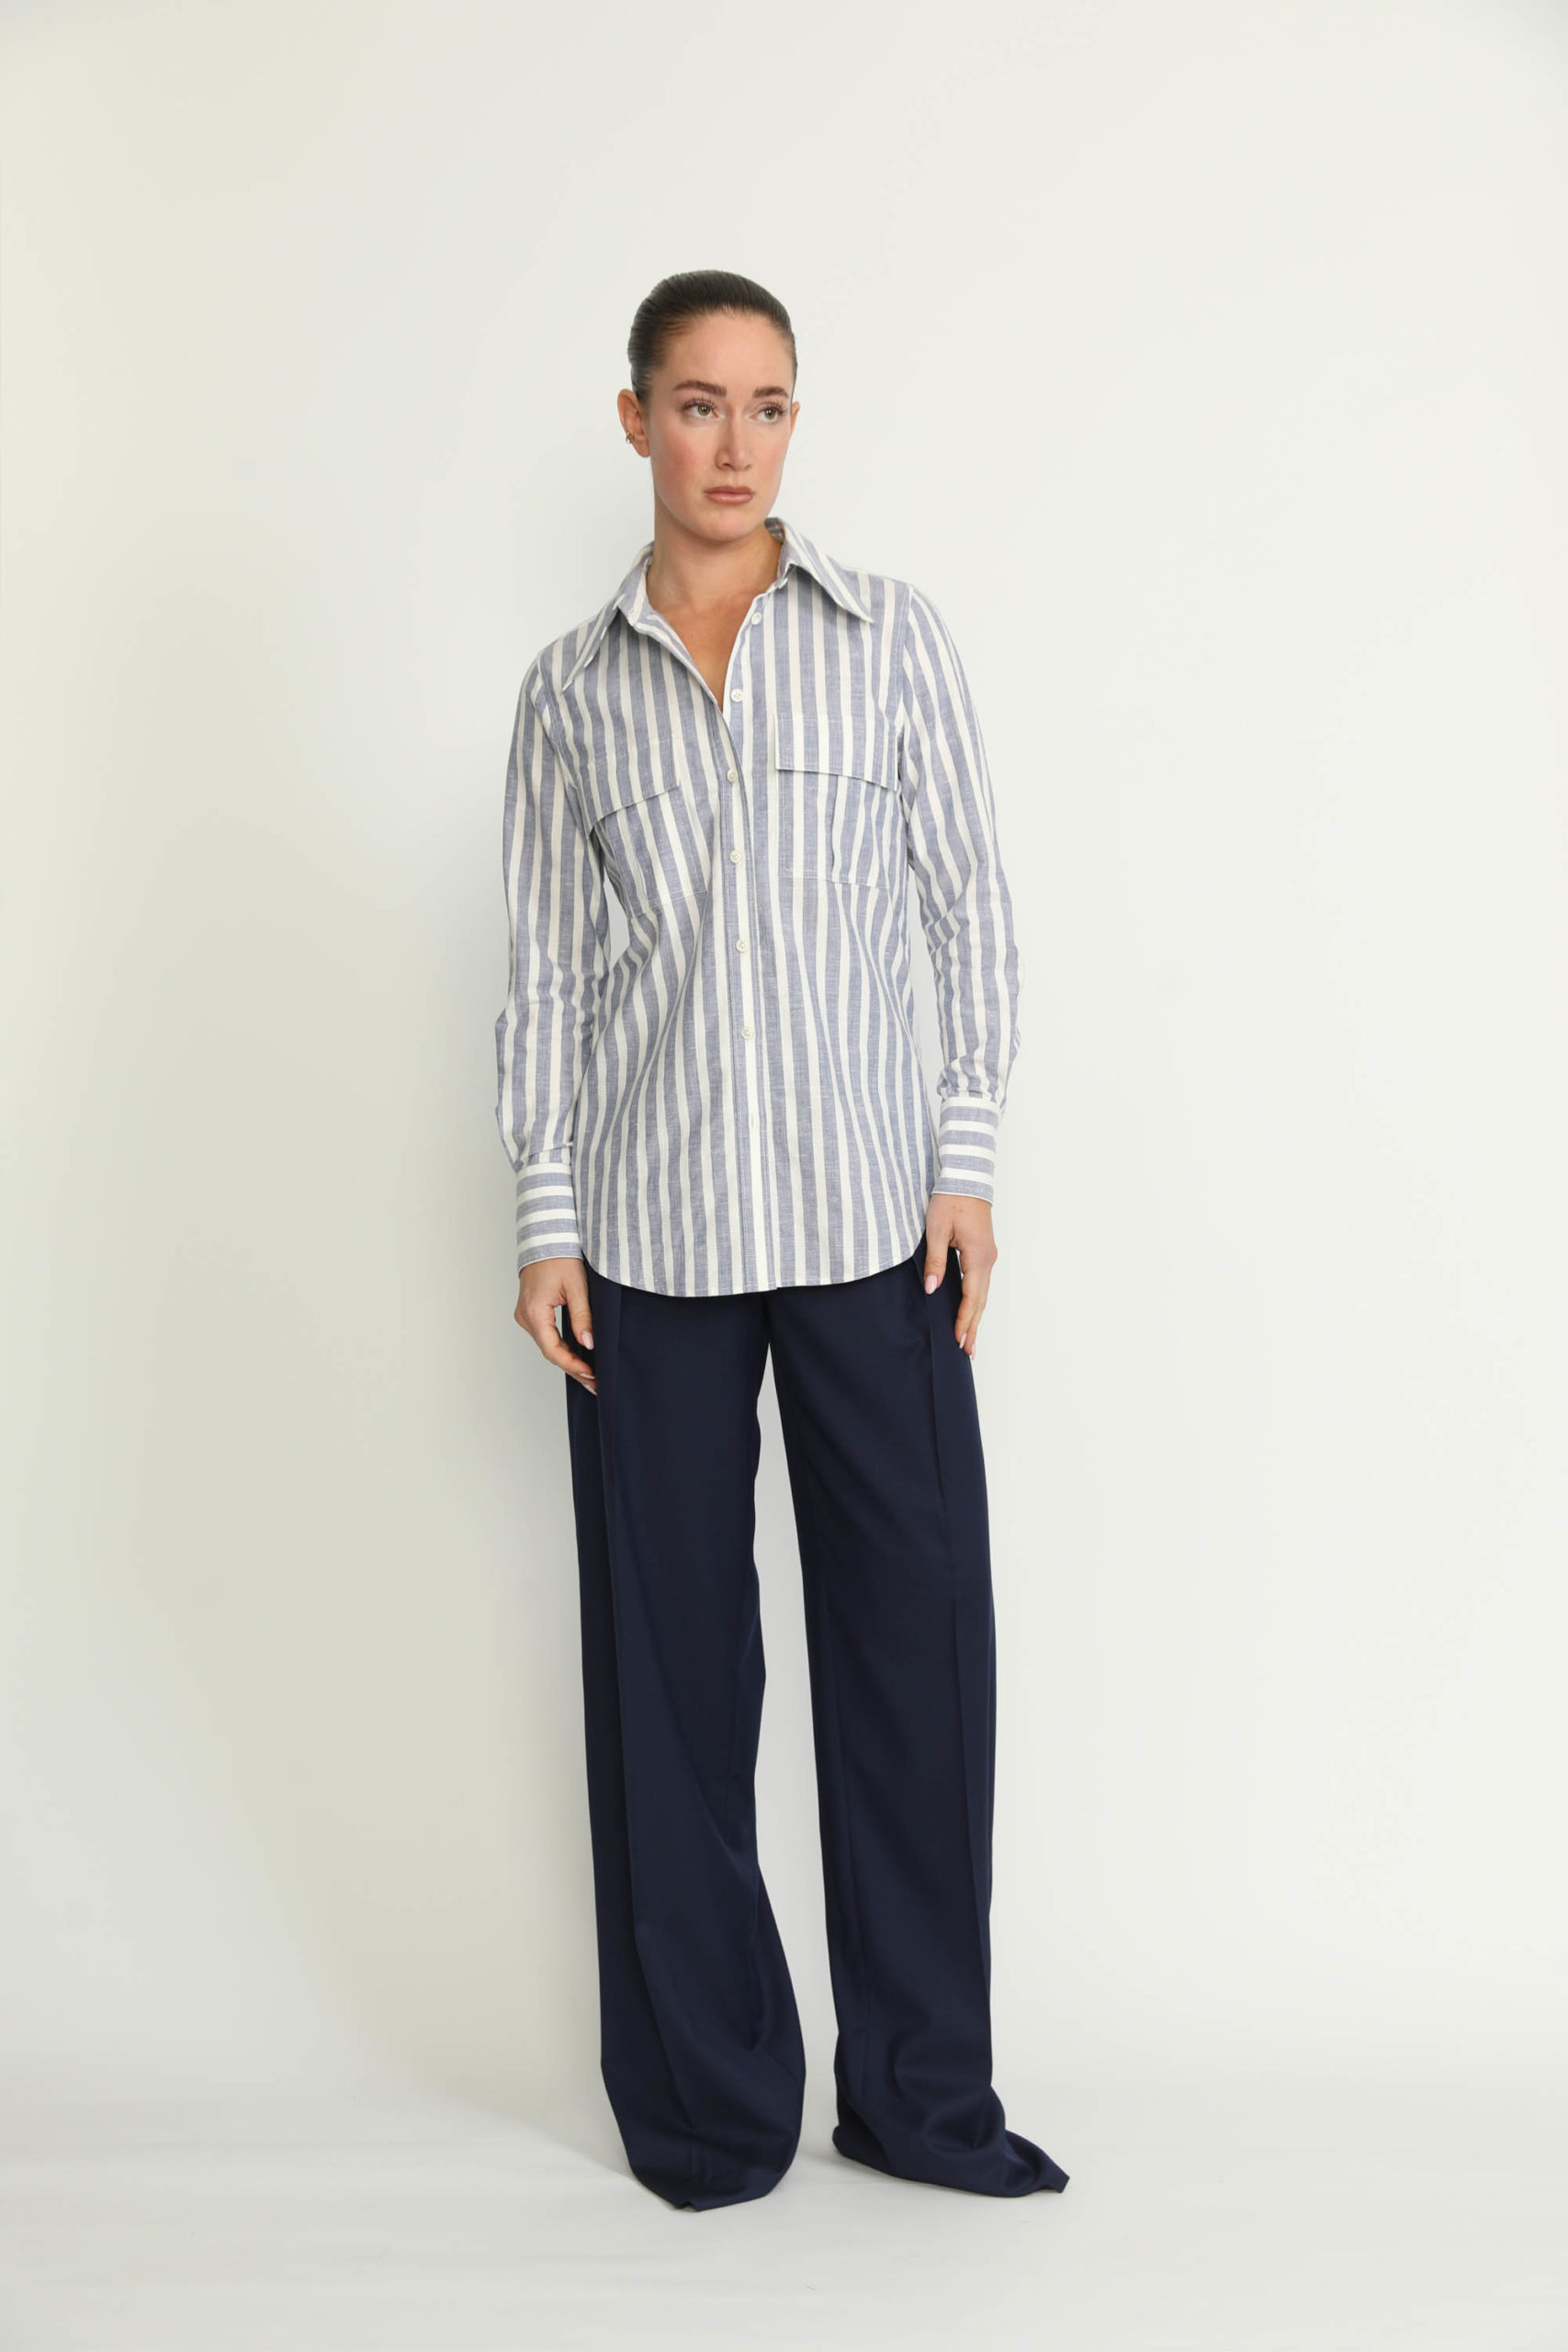 Metz Shirt – Metz Blue & White Striped Shirt0